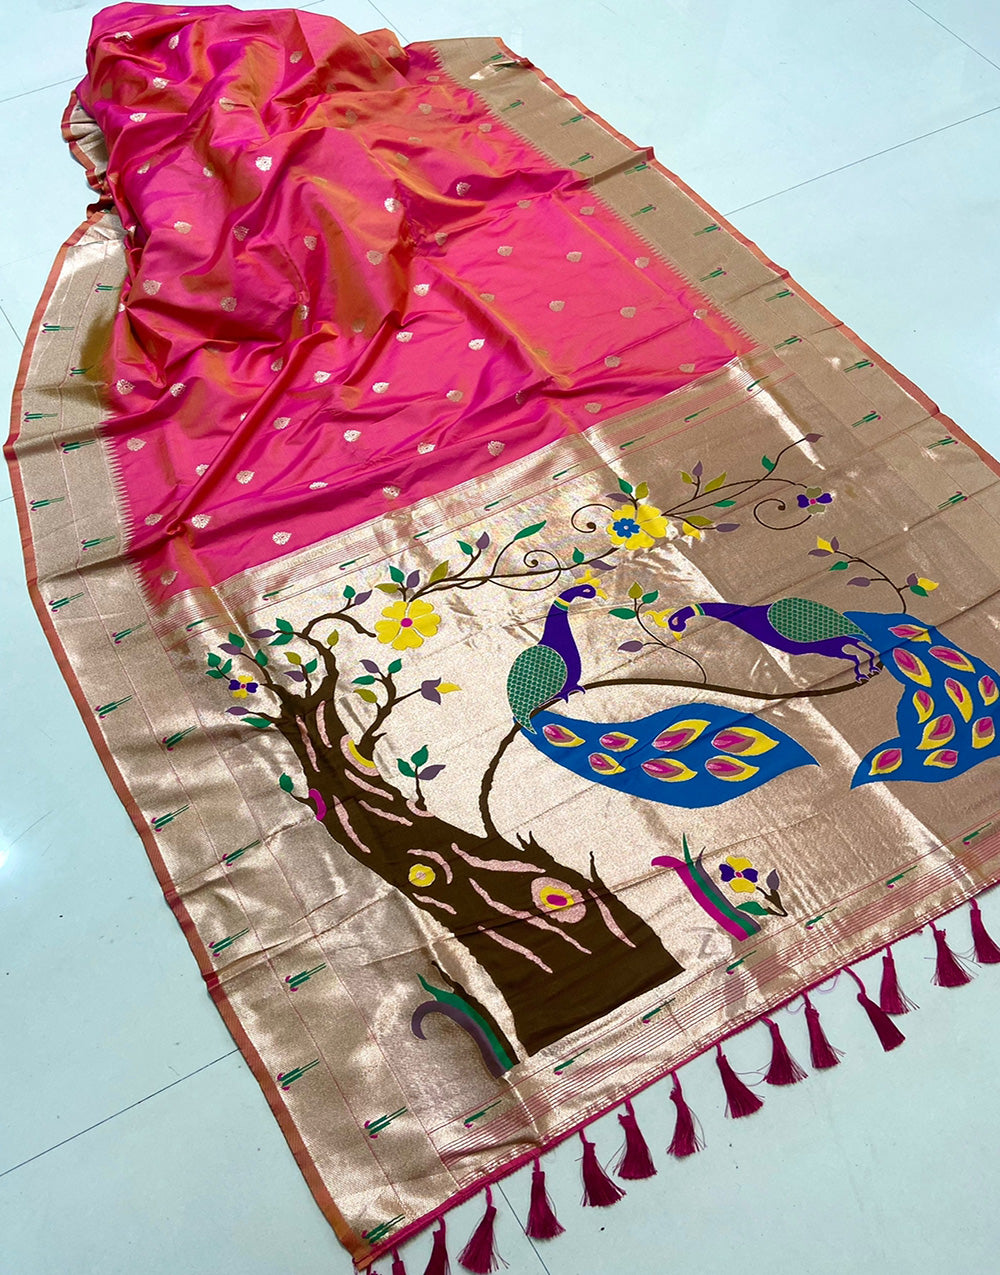 Pink Paithani Silk Saree With Zari Weaving Work